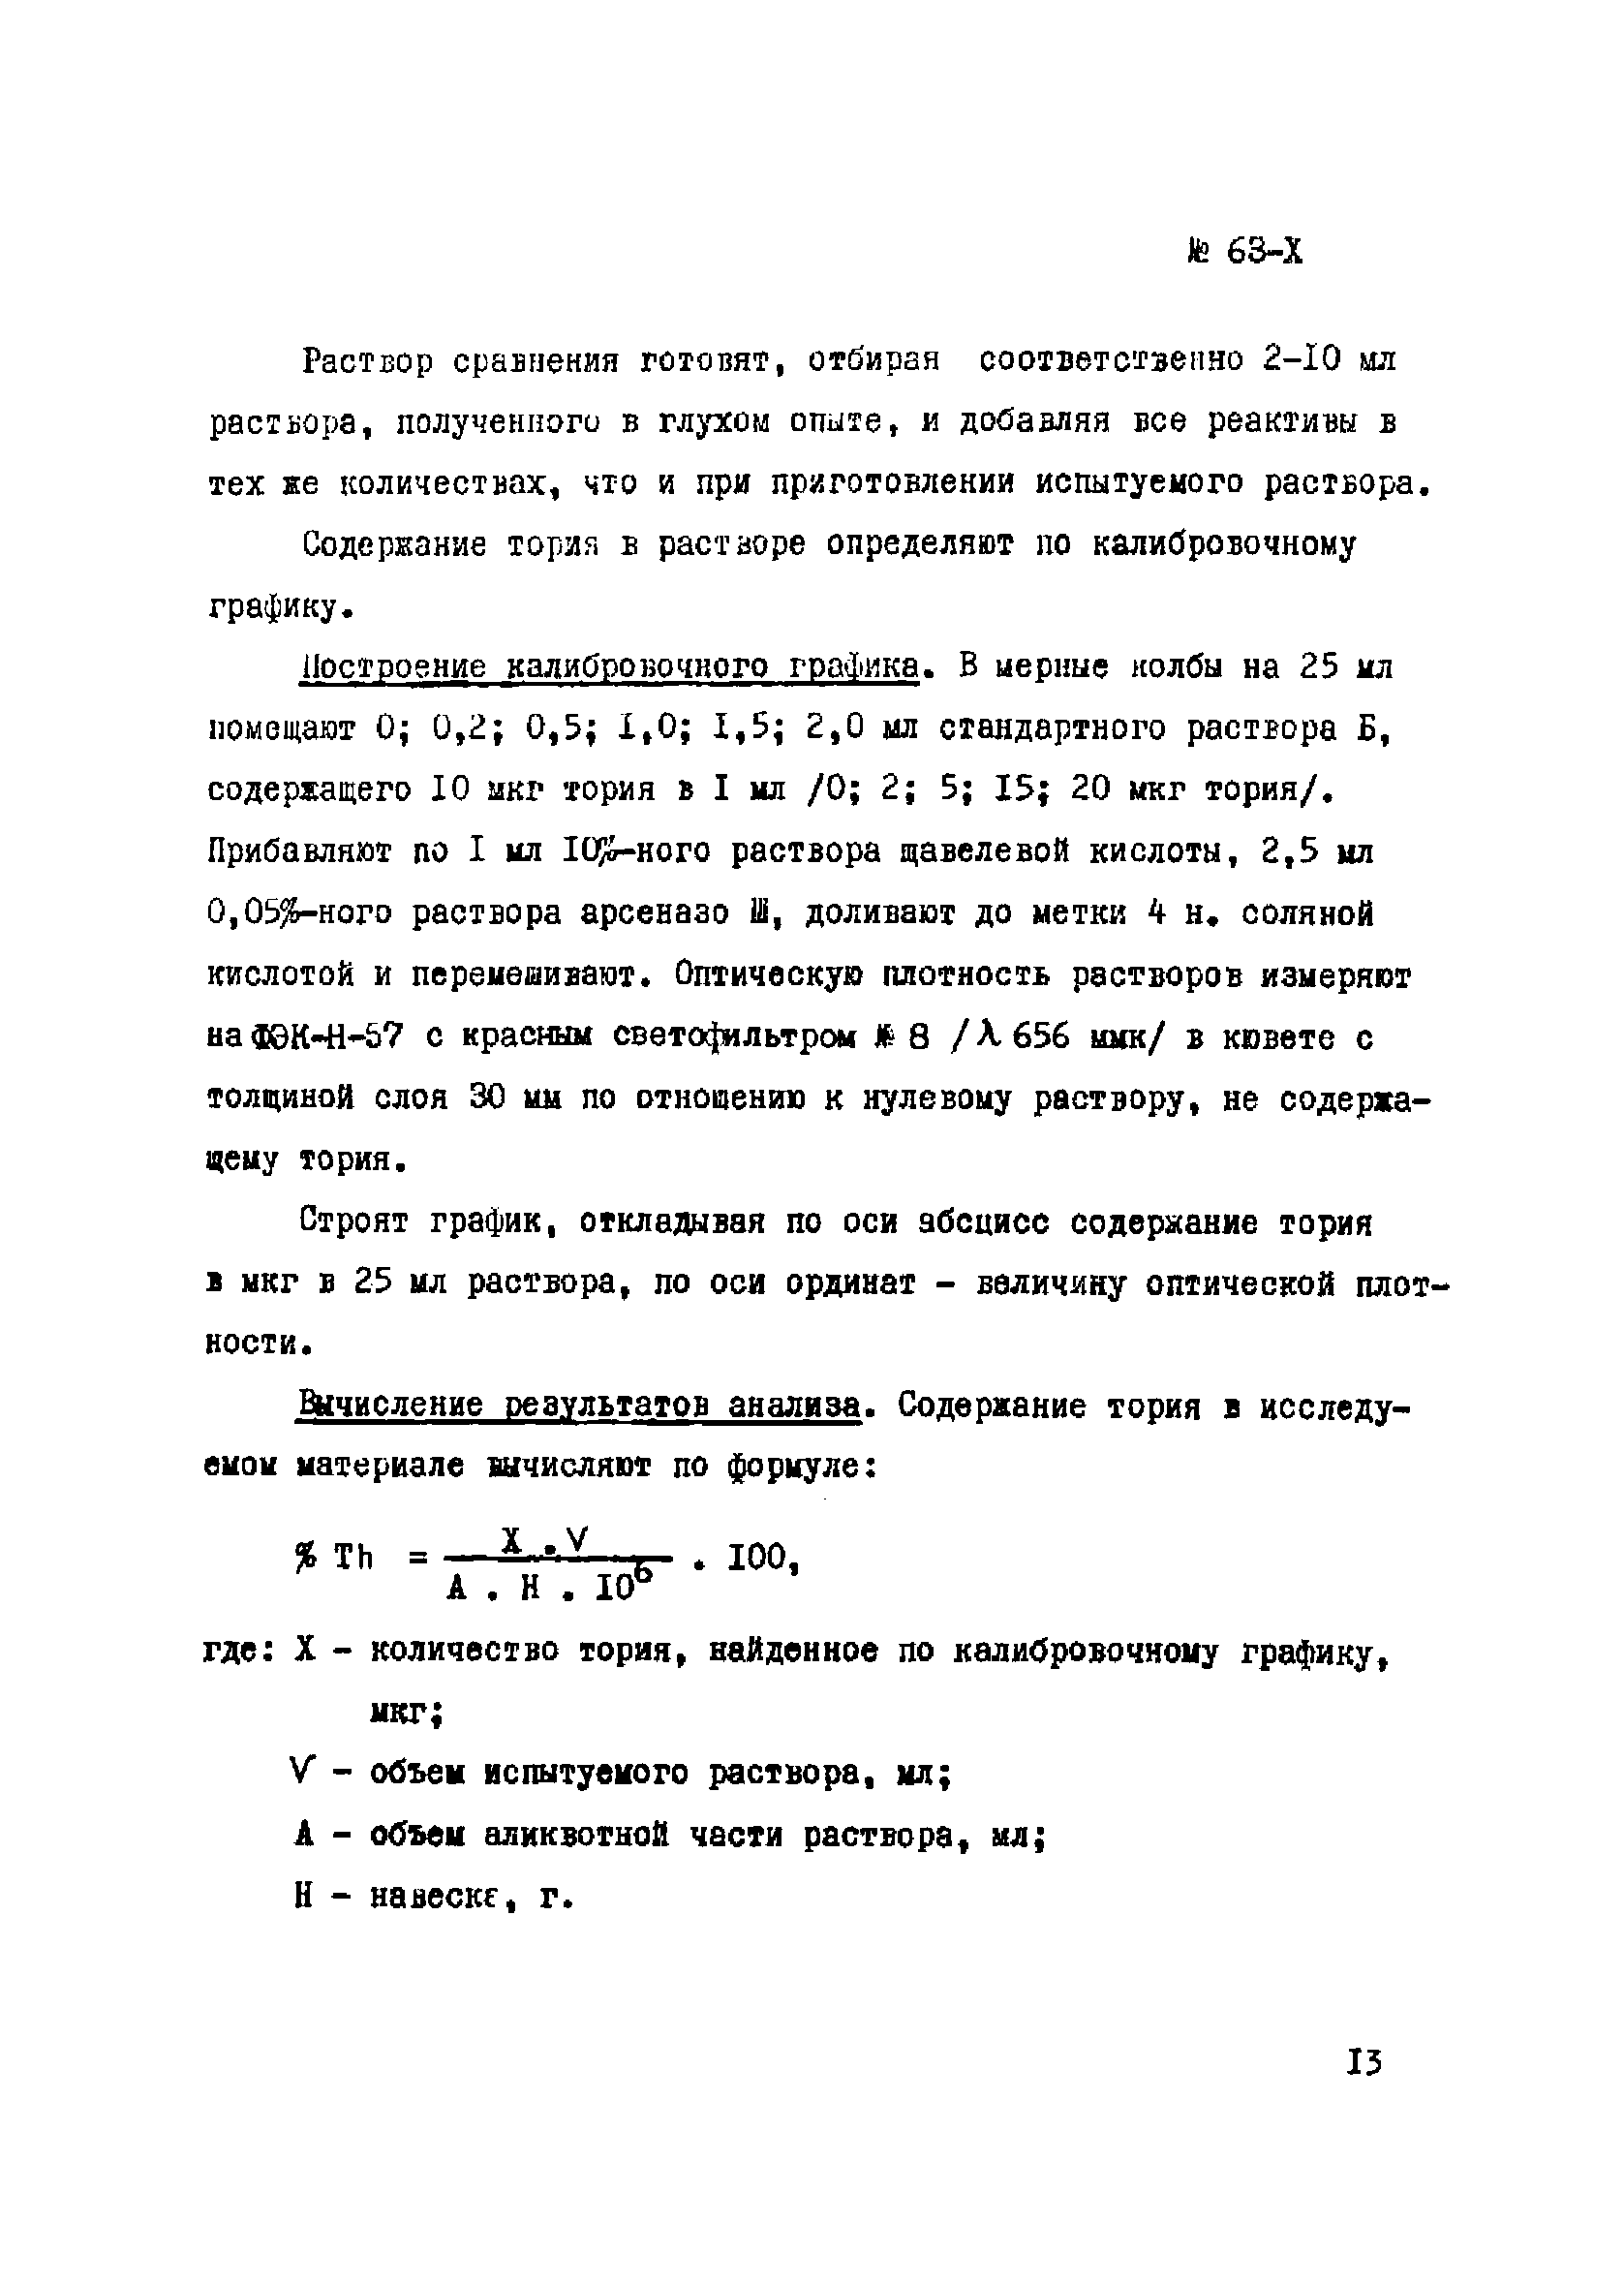 Инструкция НСАМ 63-Х